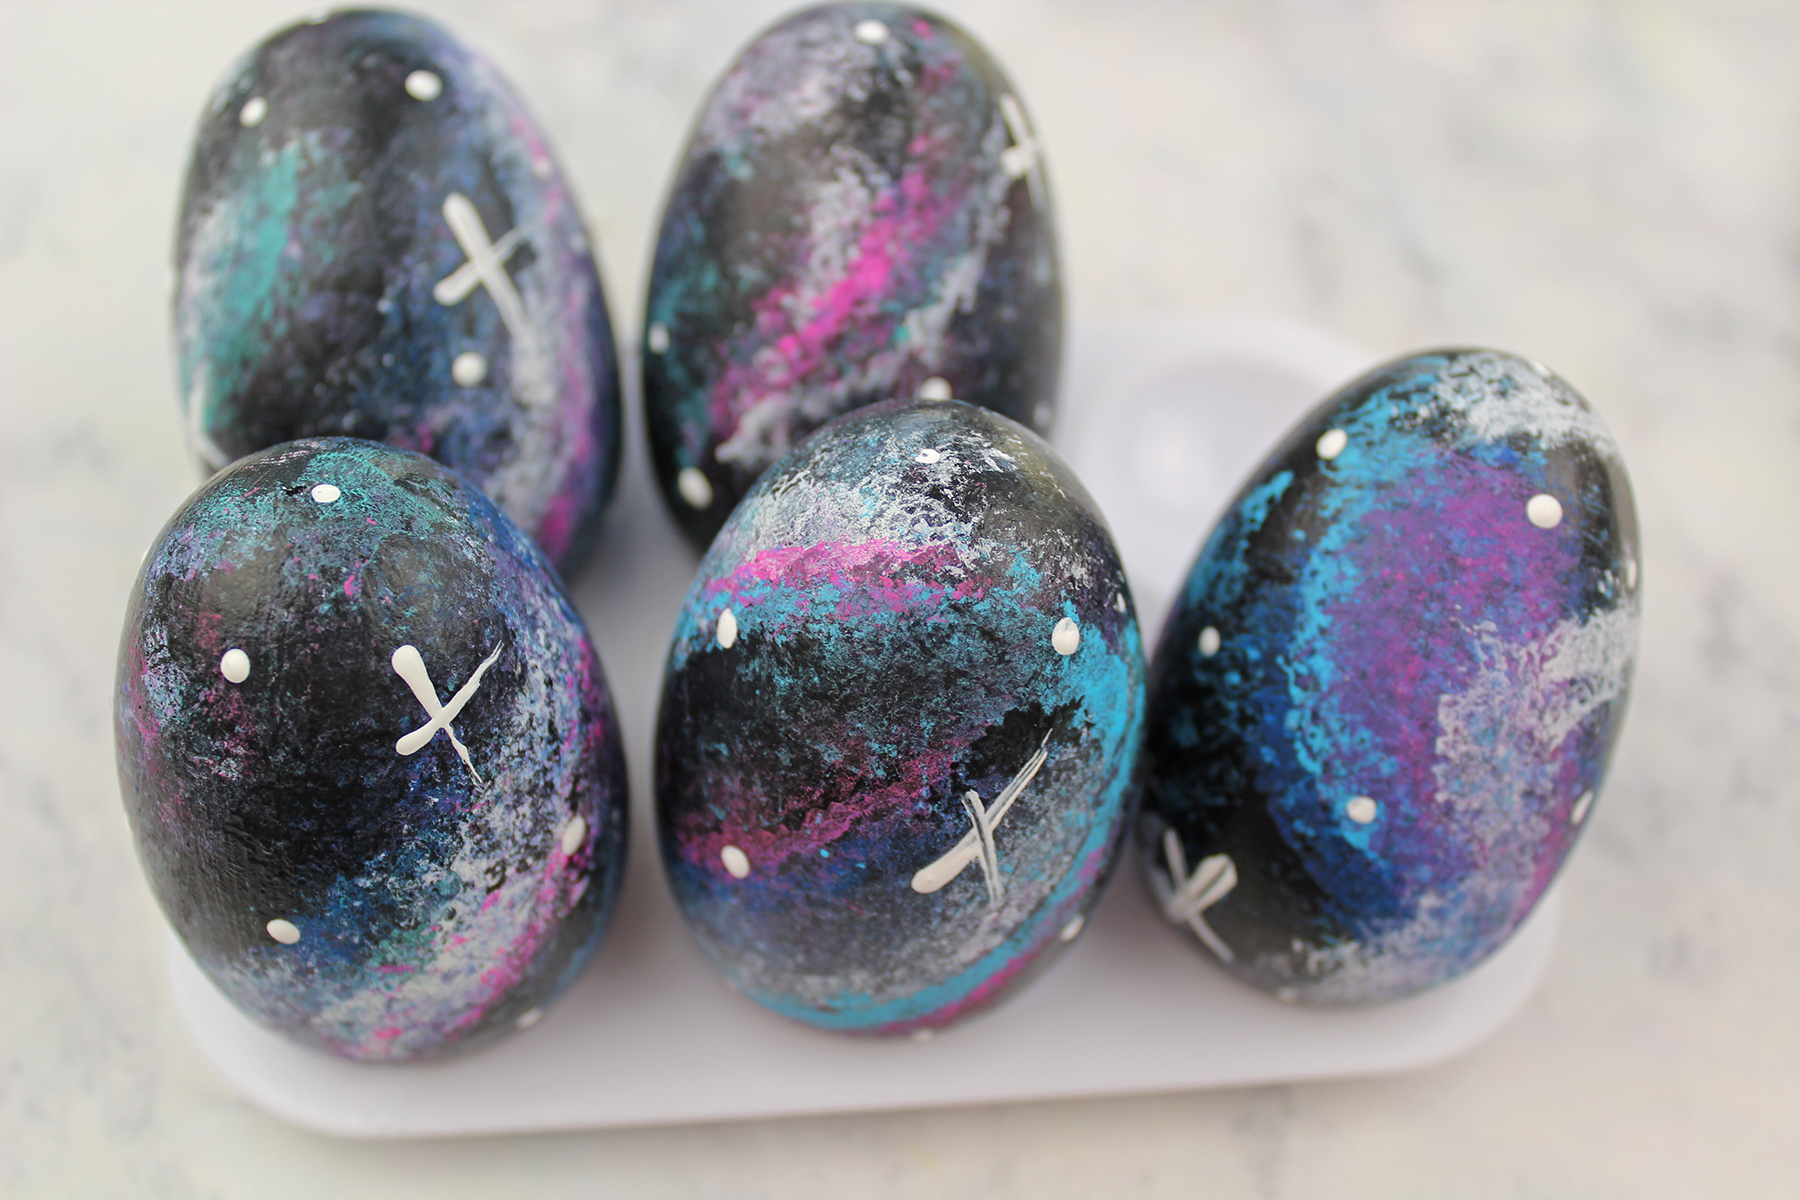 Galaxy Easter Eggs